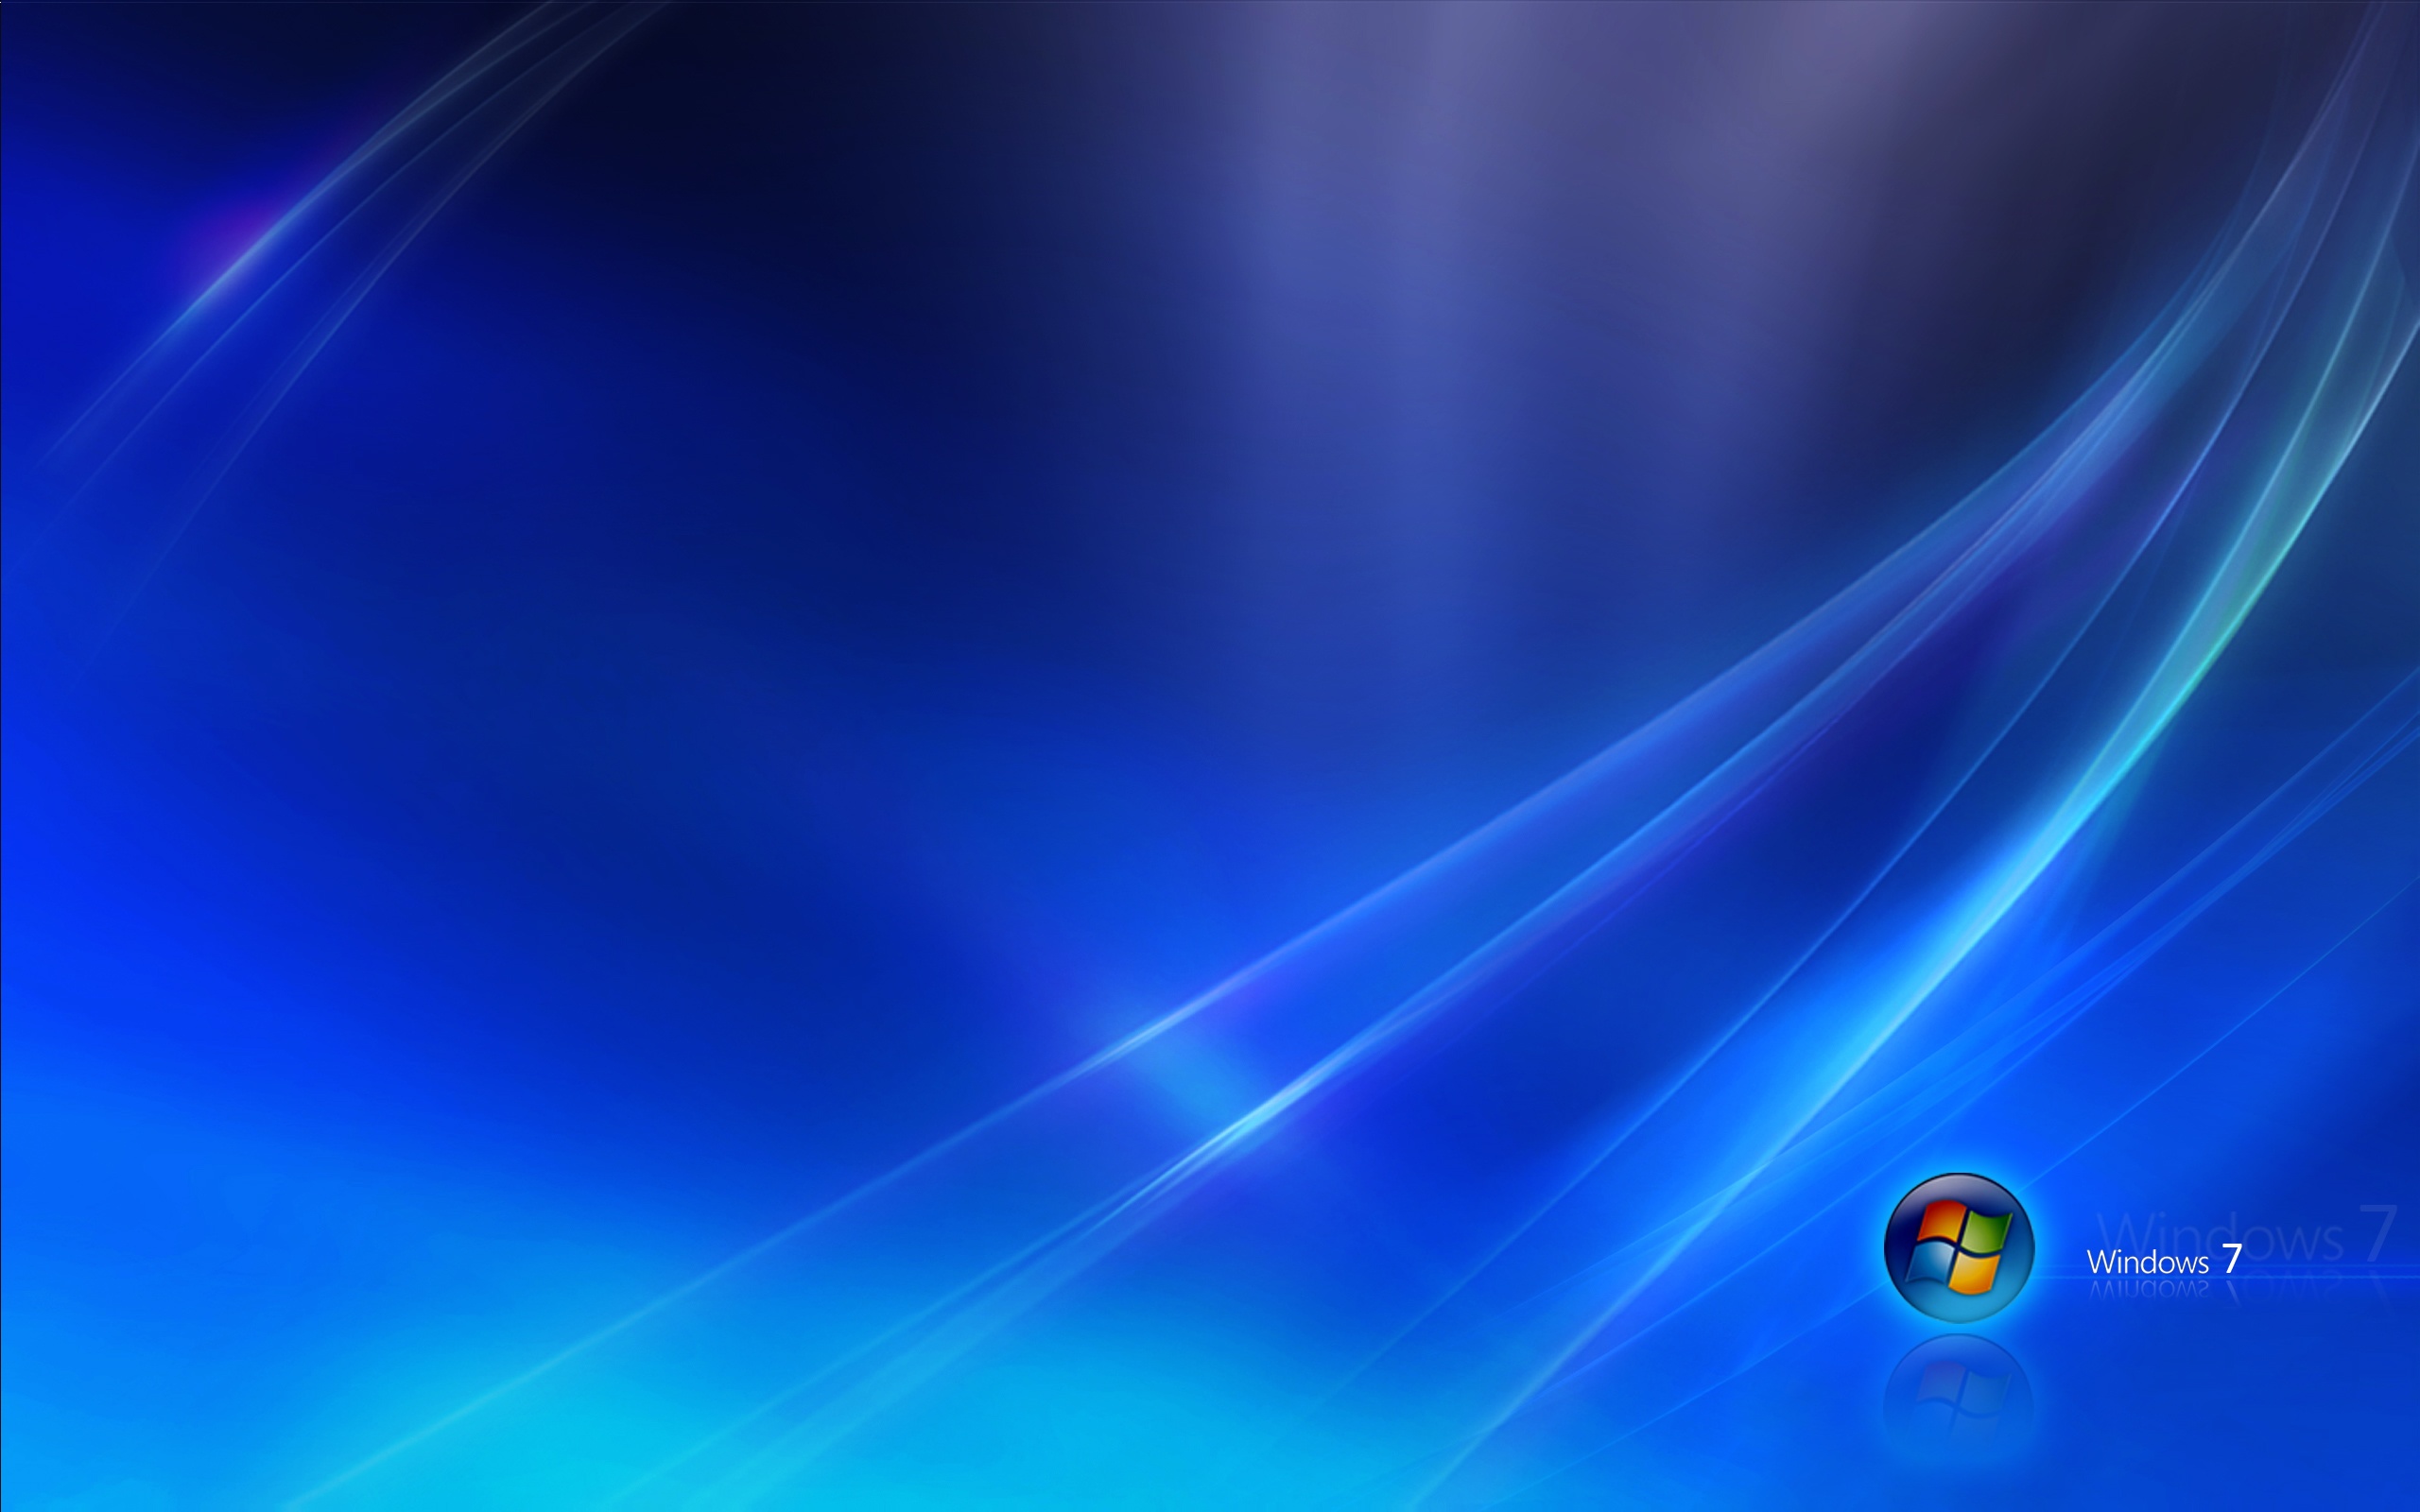 Windows 7 Blue Dark Wallpaper in jpg format for free download